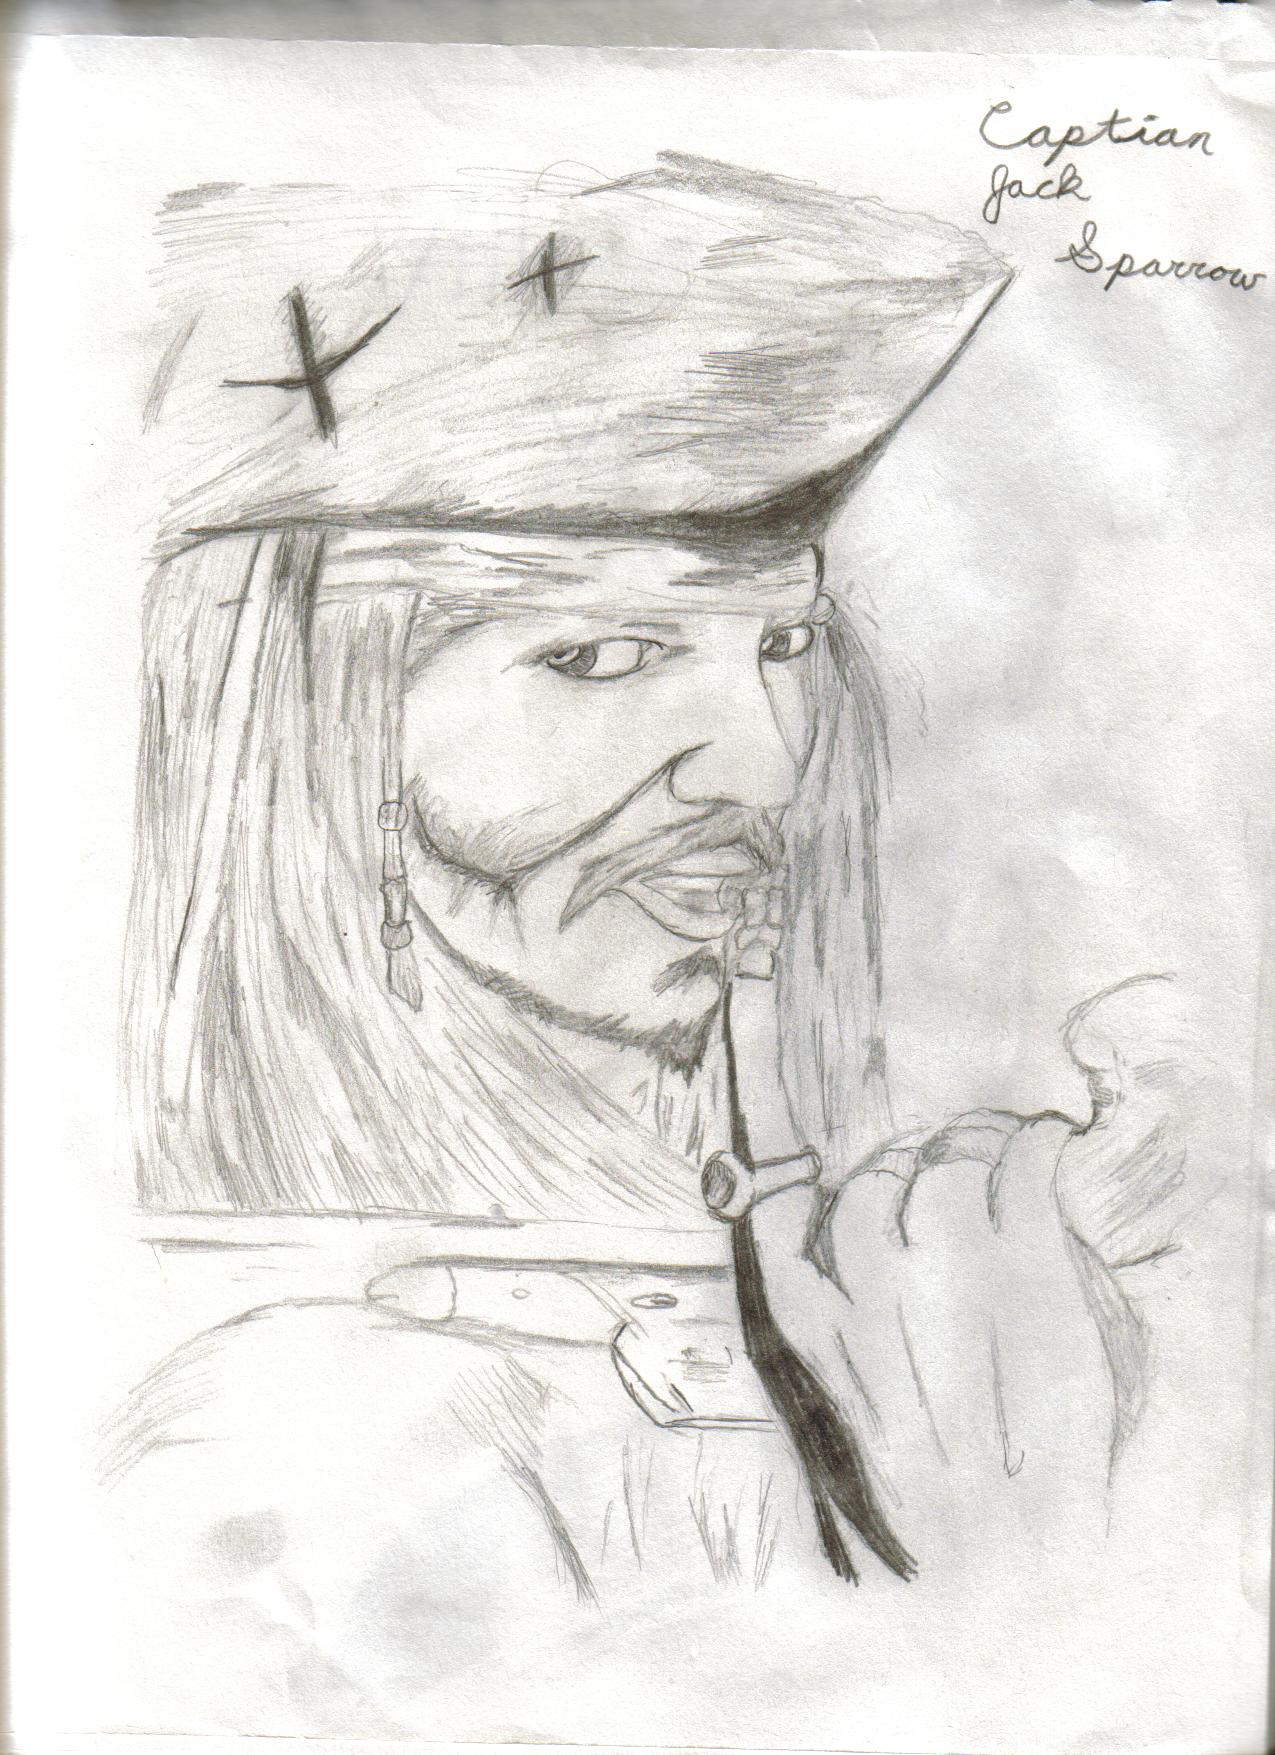 CAPTAIN Jack Sparrow by Mcrluvr